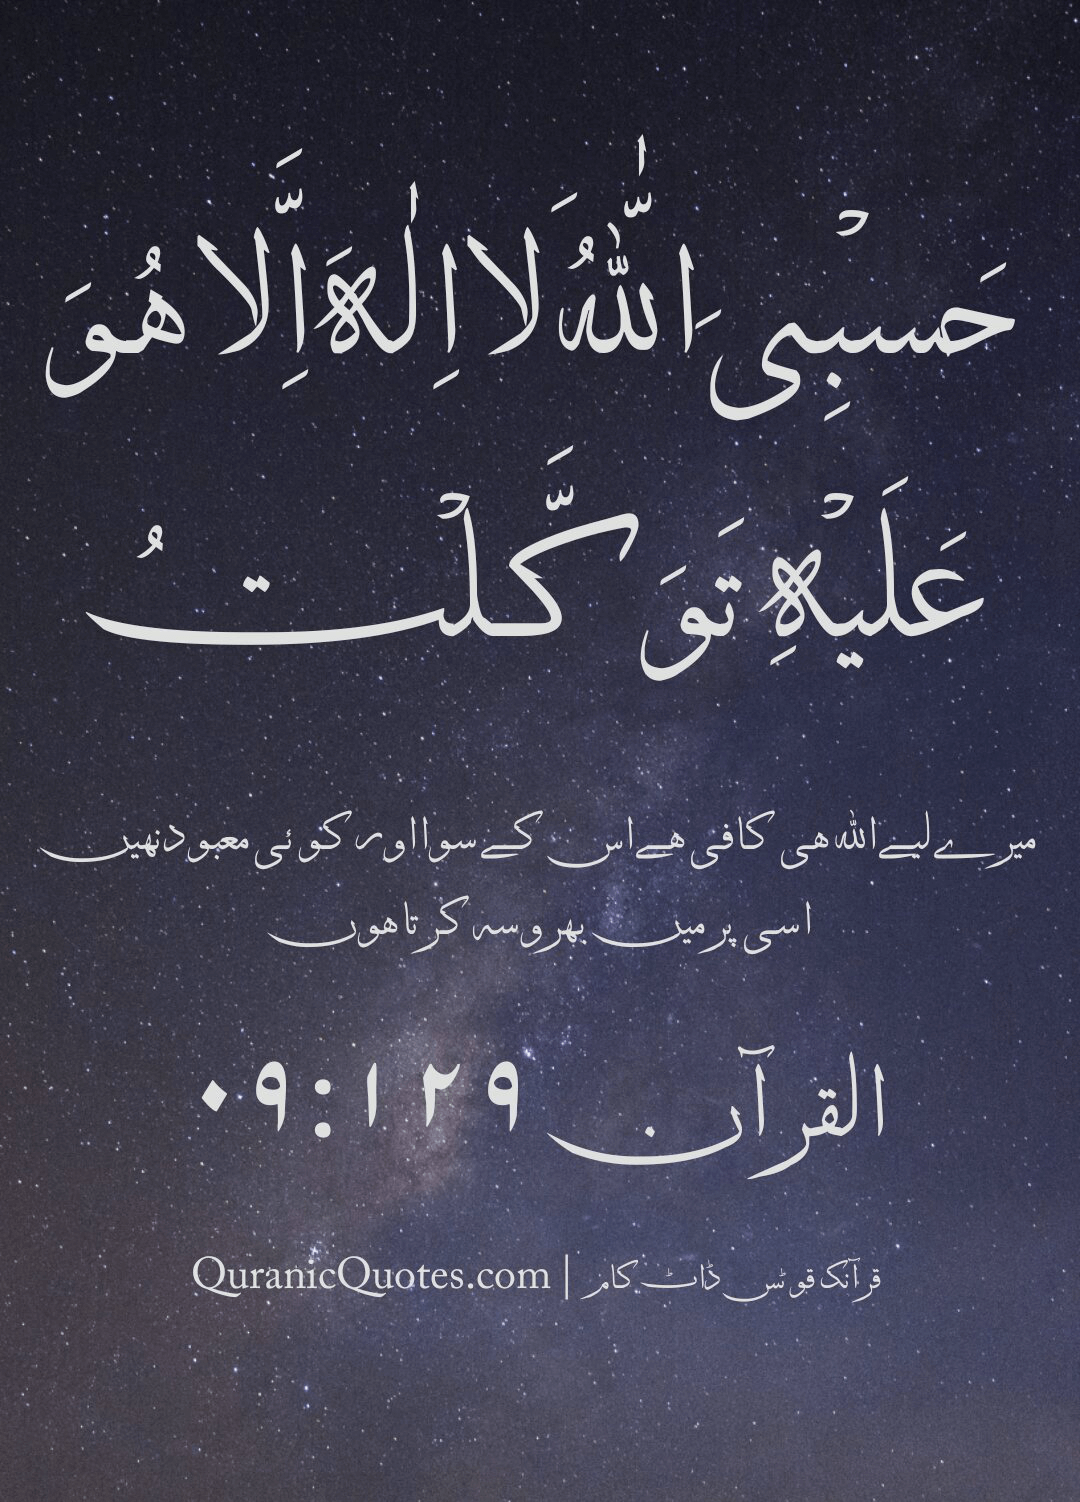 #06 The Quran 09:129 (Surah at-Tawbah) | Quranic Quotes